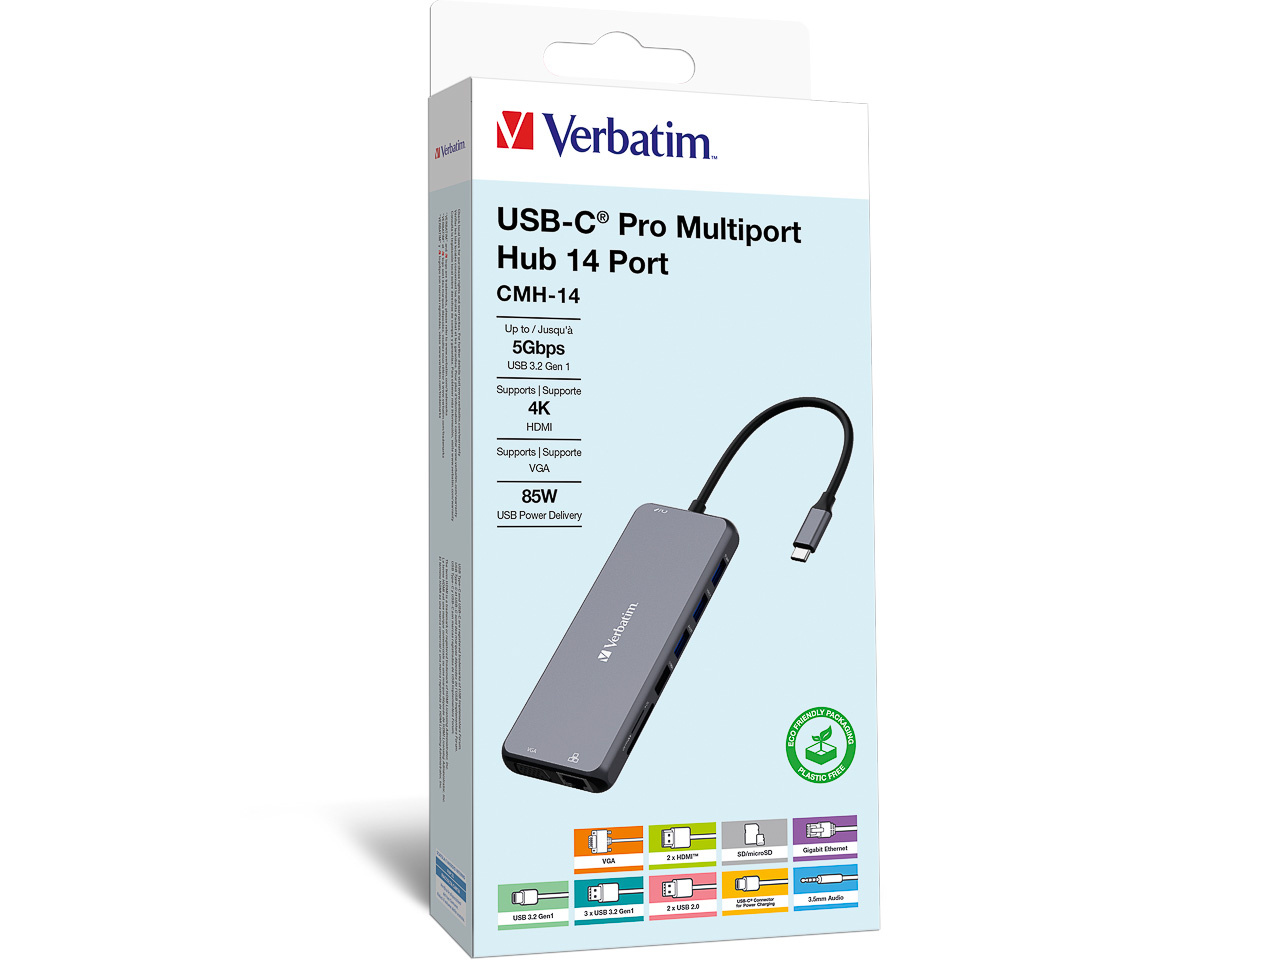 VERBATIM USB-C MULTIPORT HUB 14 32154 CMH-14 1